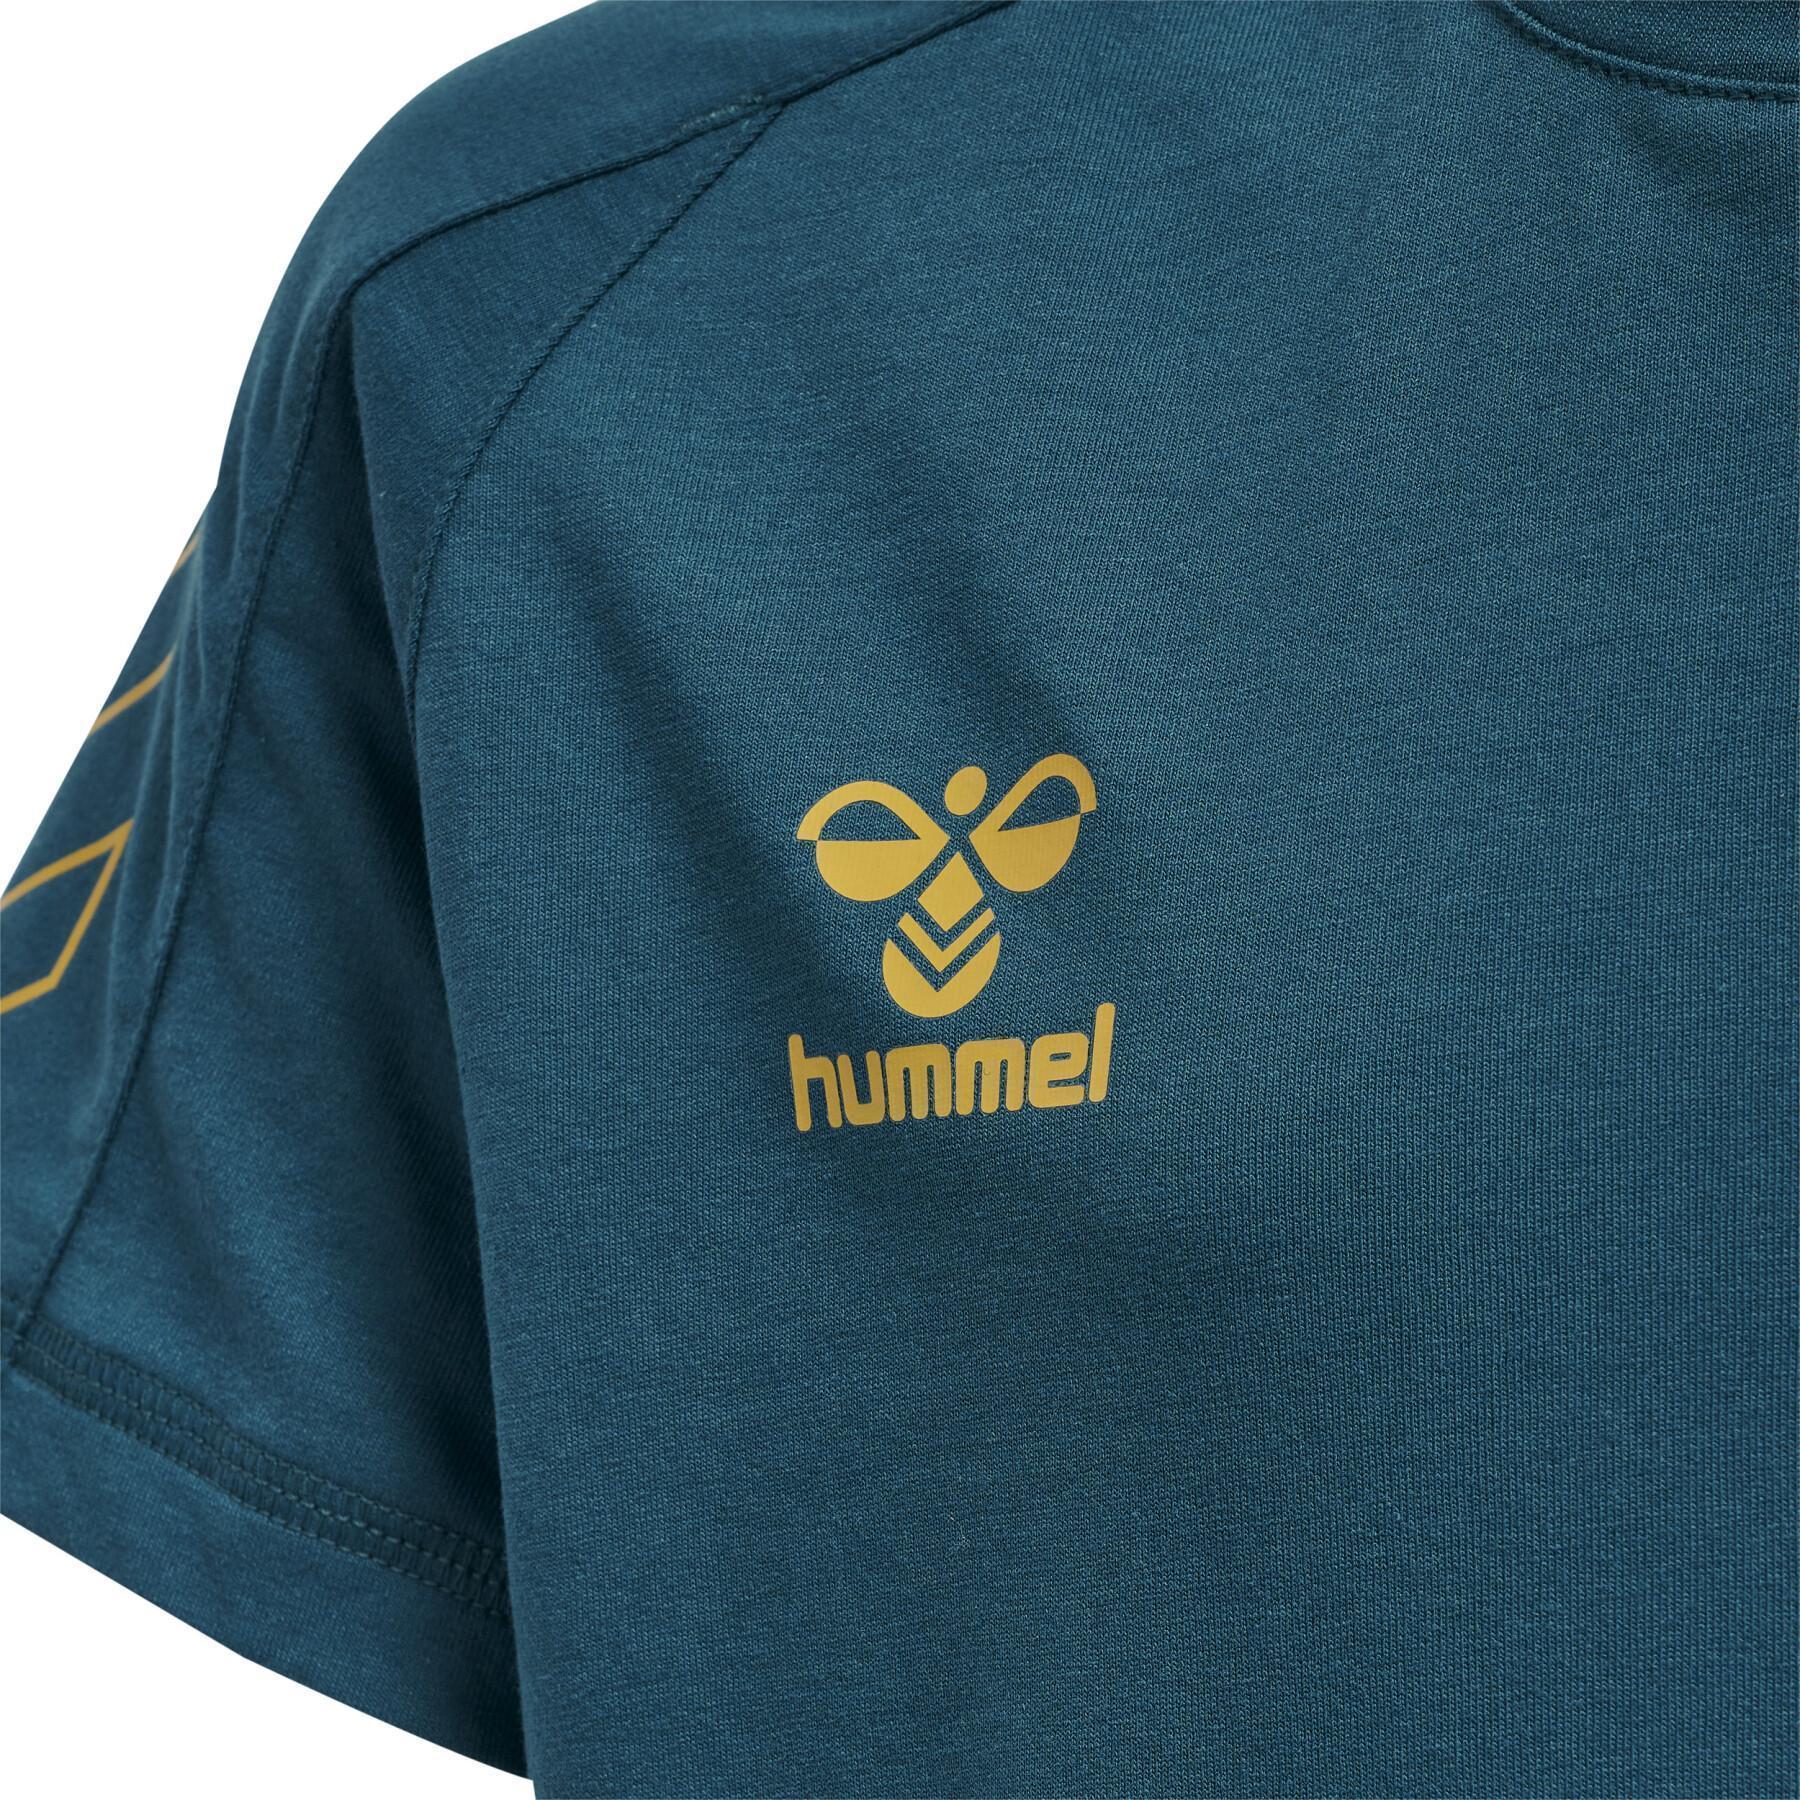 Kinder-T-shirt Hummel Cima Xk